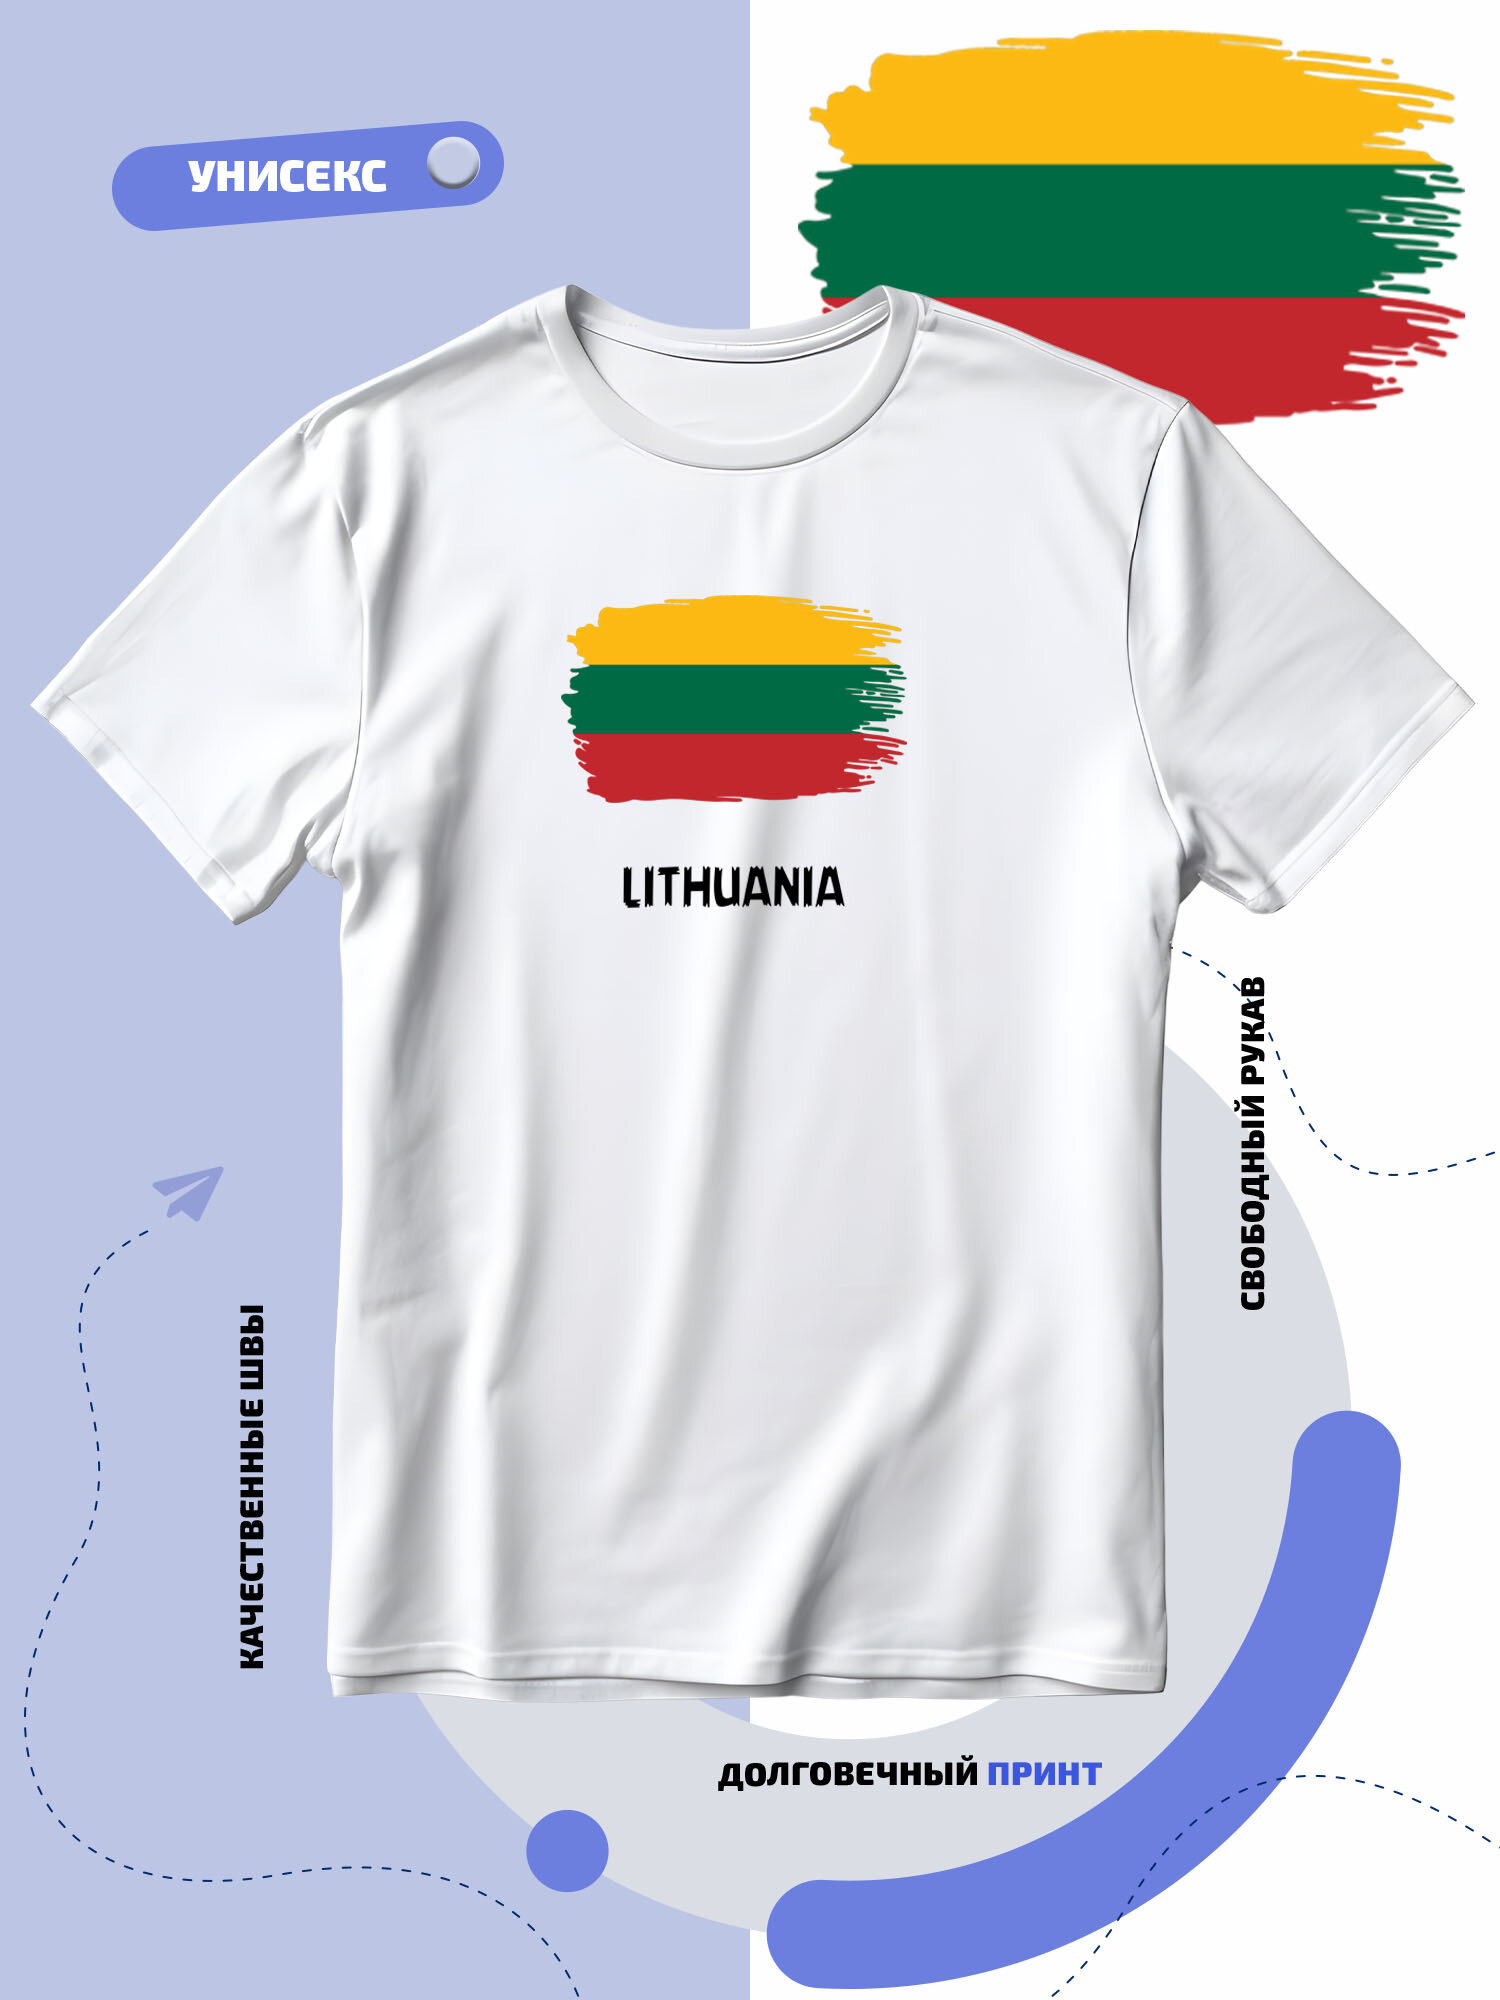 Футболка SMAIL-P с флагом Литвы-Lithuania